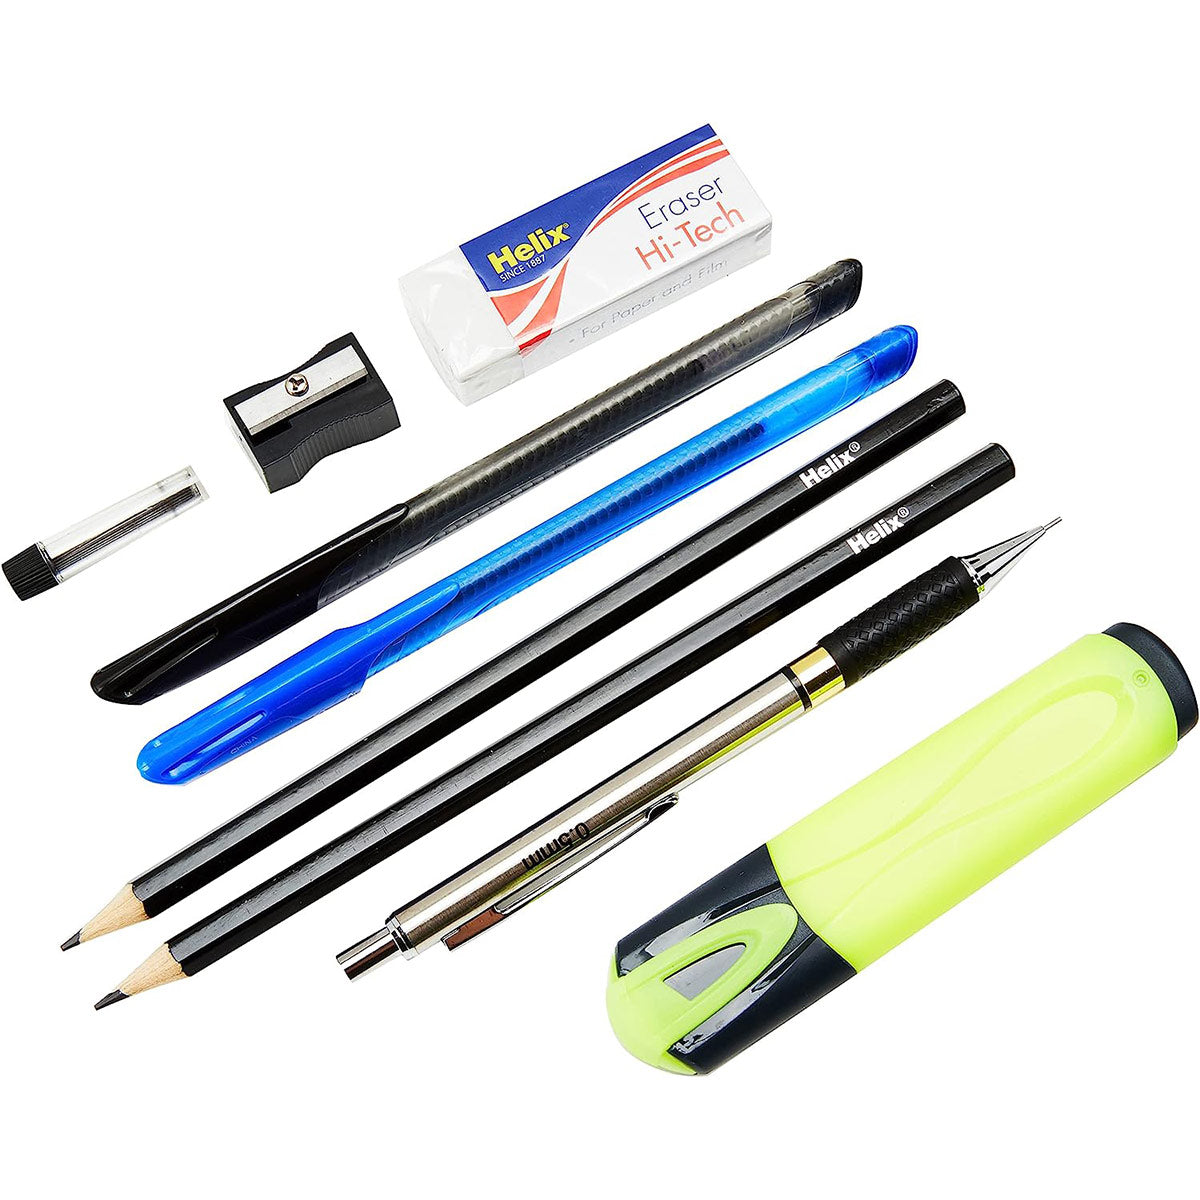 Helix - Ultimate School Pencil Pen & Lineal Set